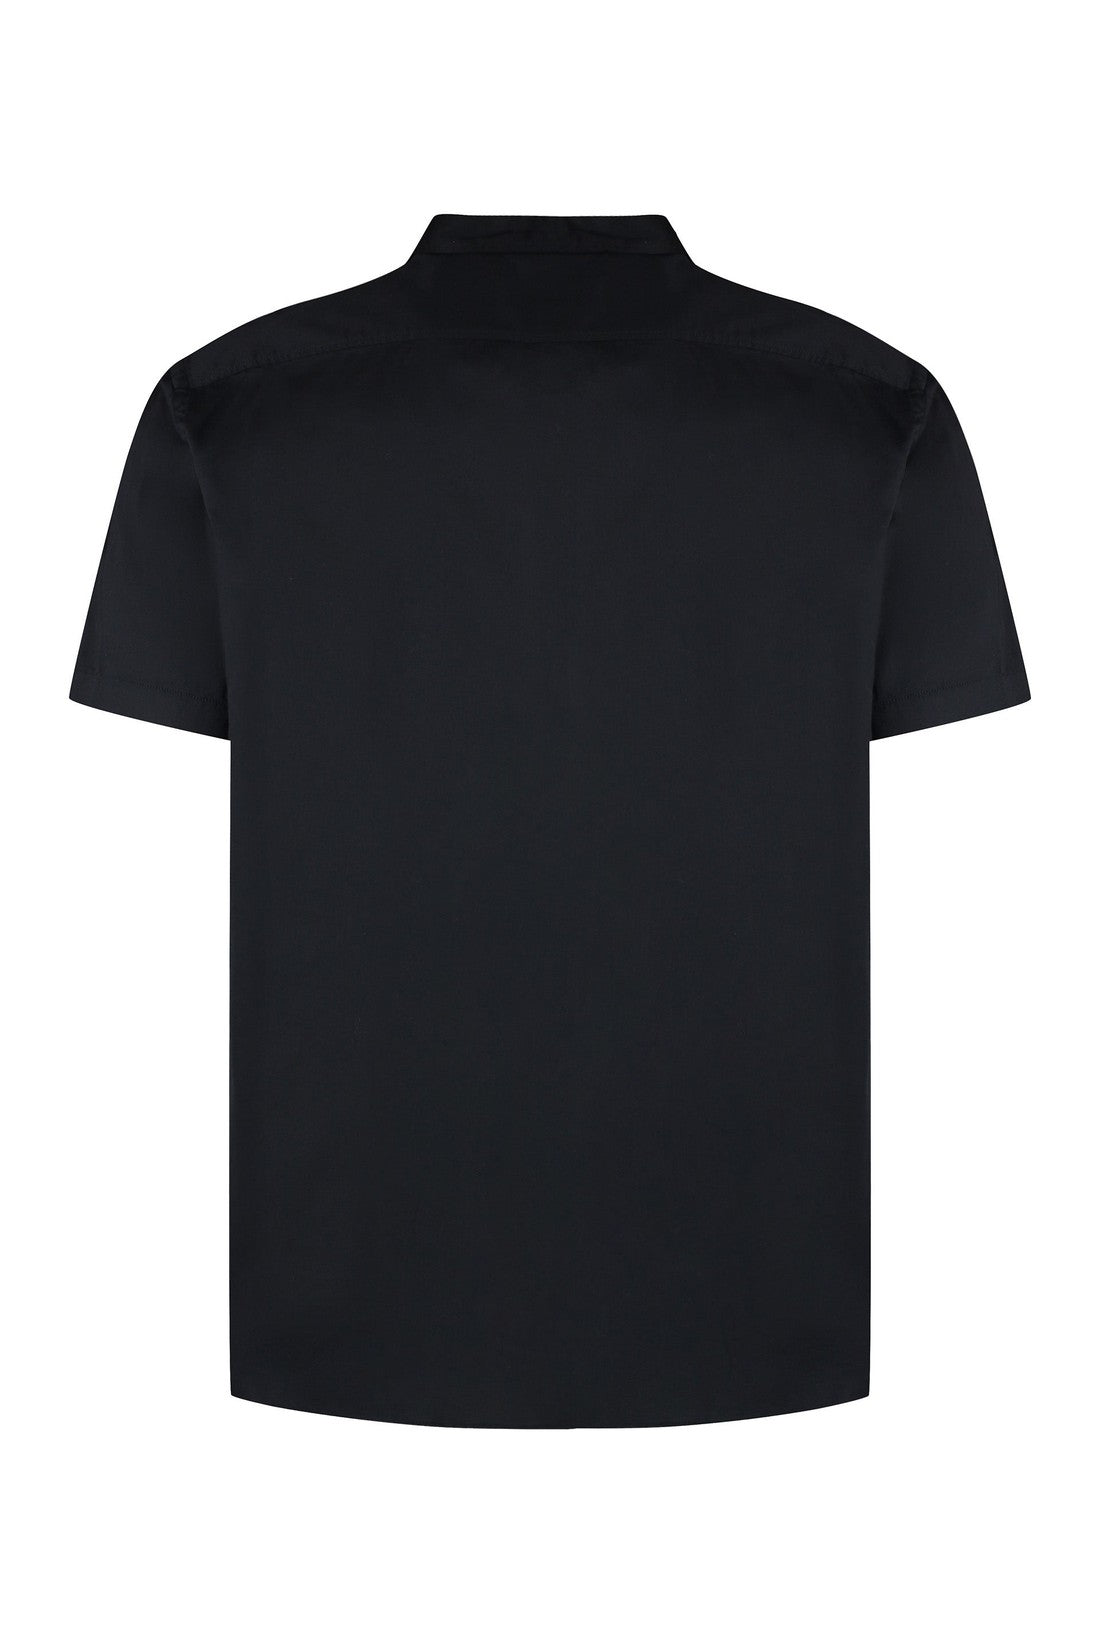 BOSS-OUTLET-SALE-Short sleeve stretch cotton shirt-ARCHIVIST